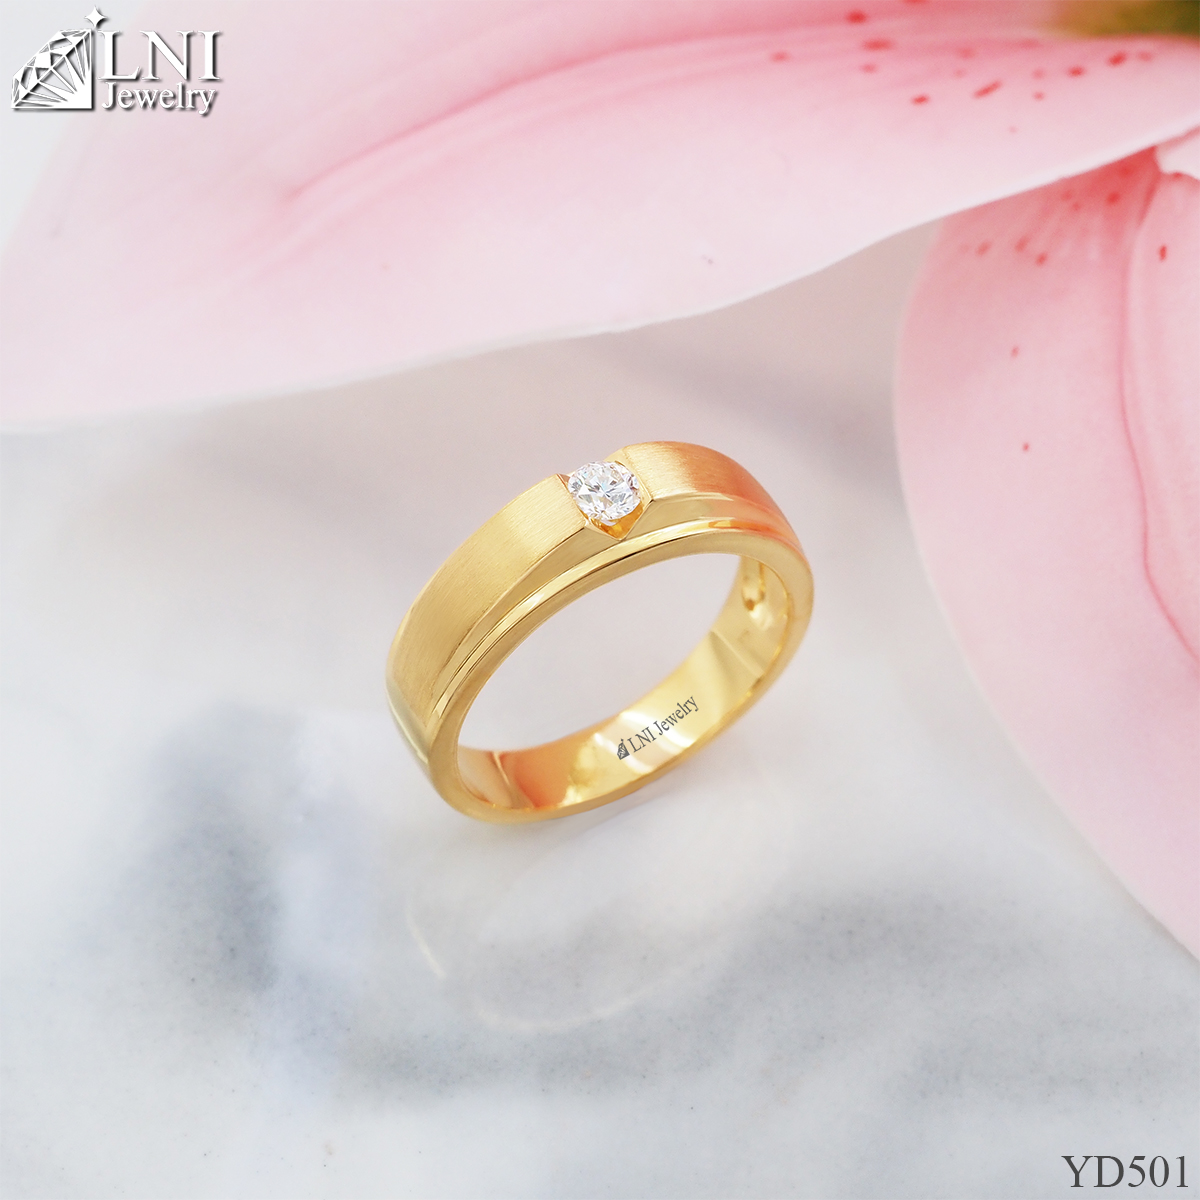 YD501 Single Diamond Ring